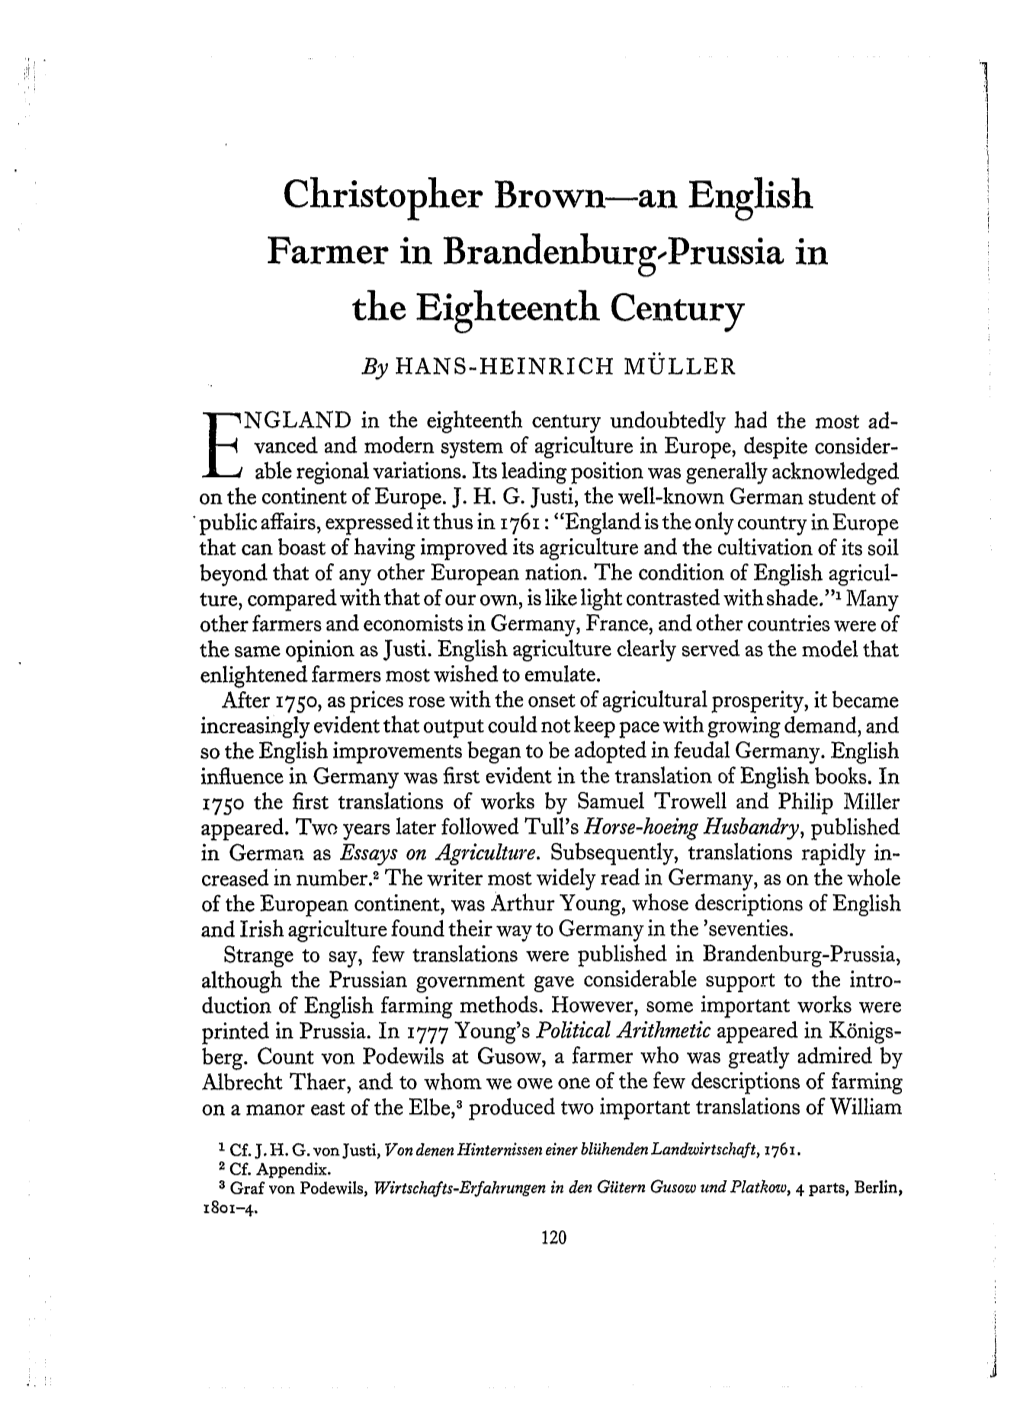 An English Farmer in Brandenburg.Prussia in the Eighteenth Century